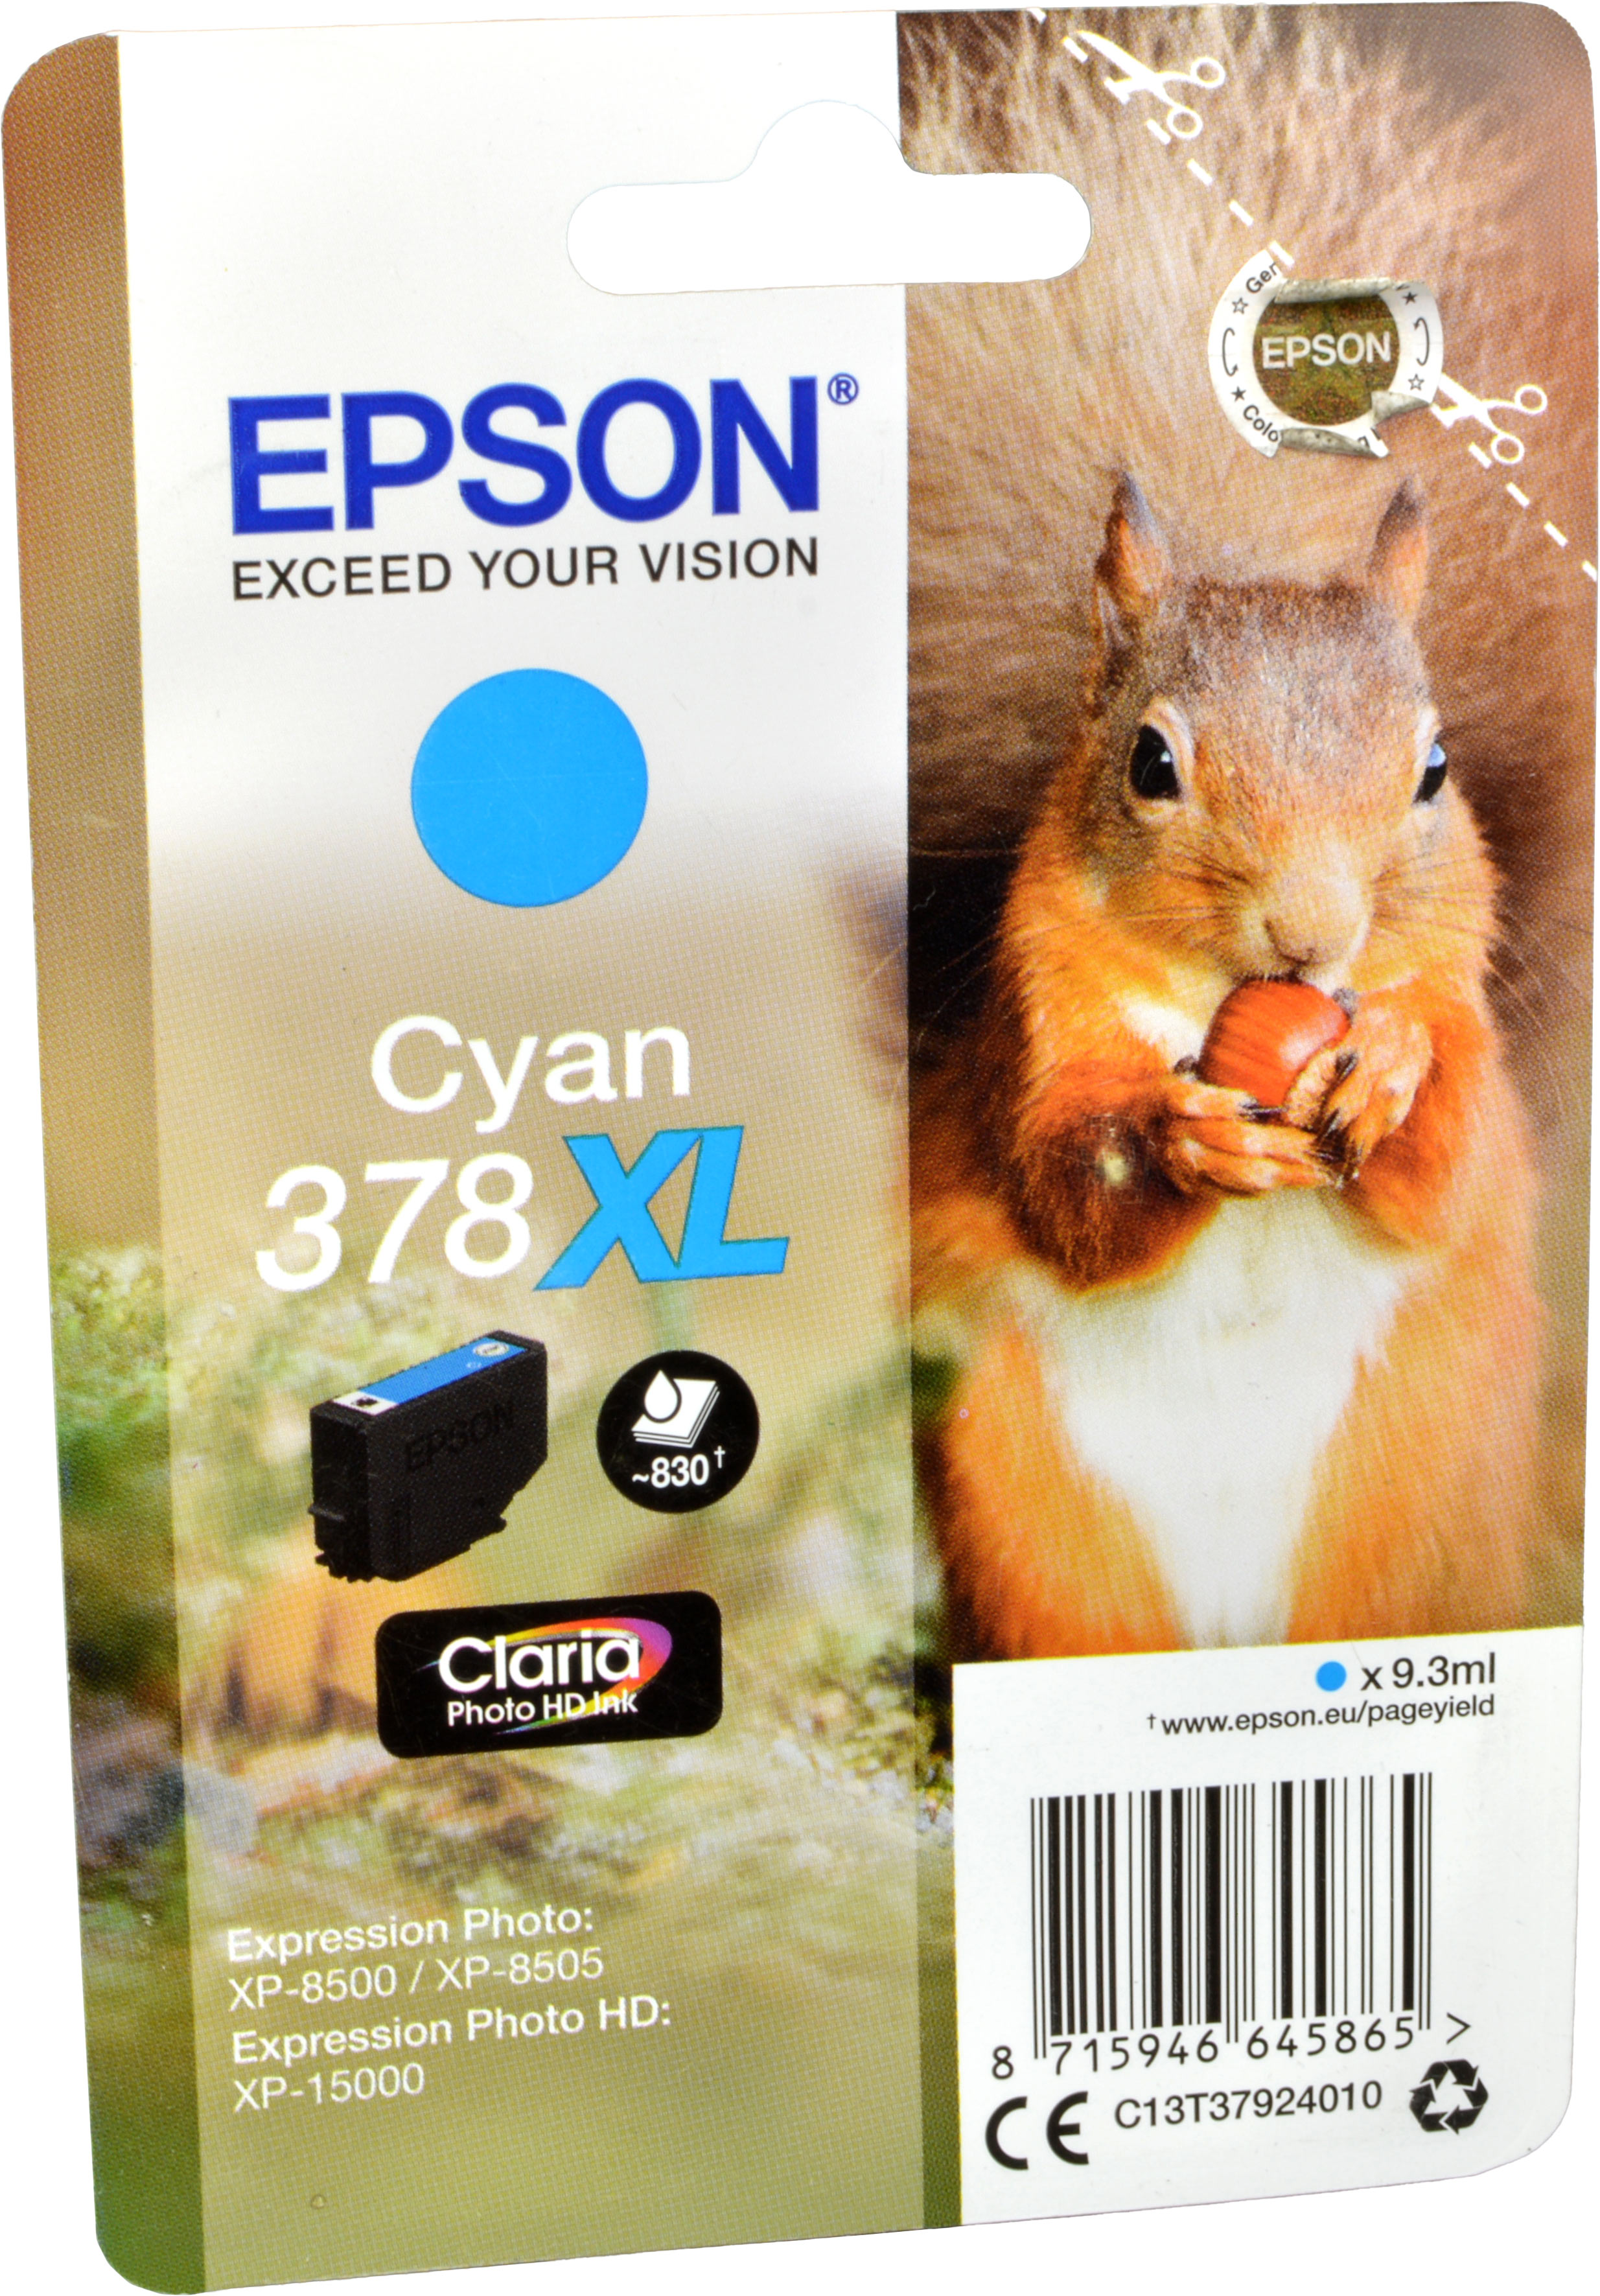 Epson Tinte C13T37924010  Cyan 378XL  cyan